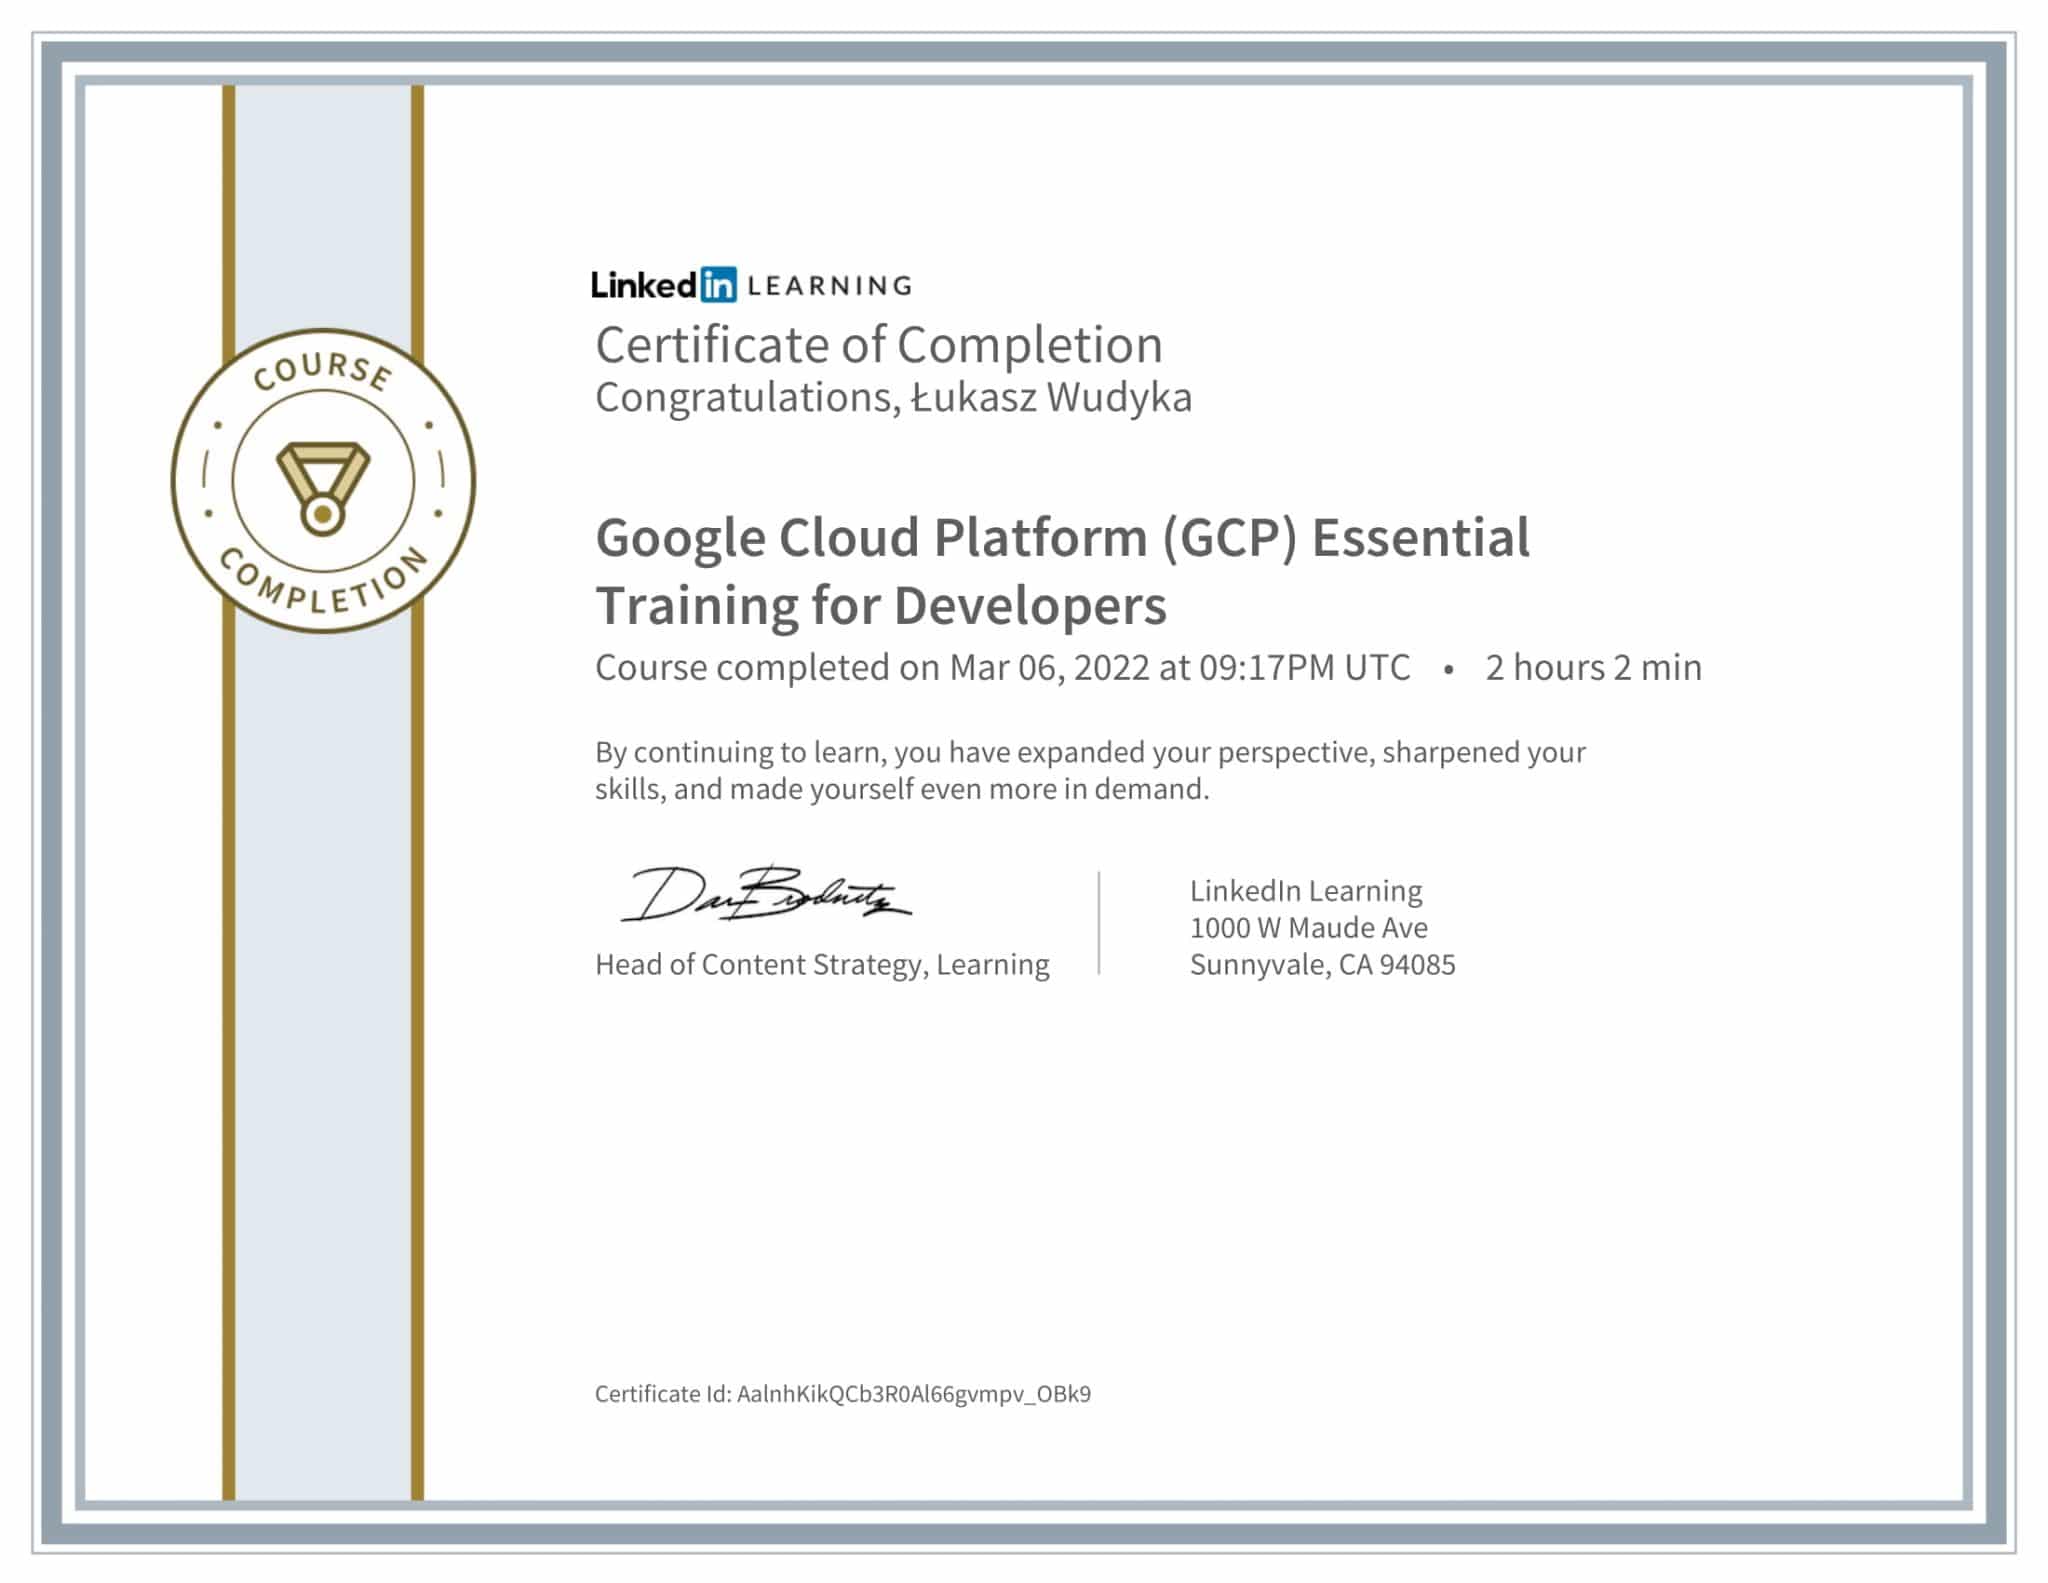 CertificateOfCompletion_Google Cloud Platform GCP Essential Training for Developers-1